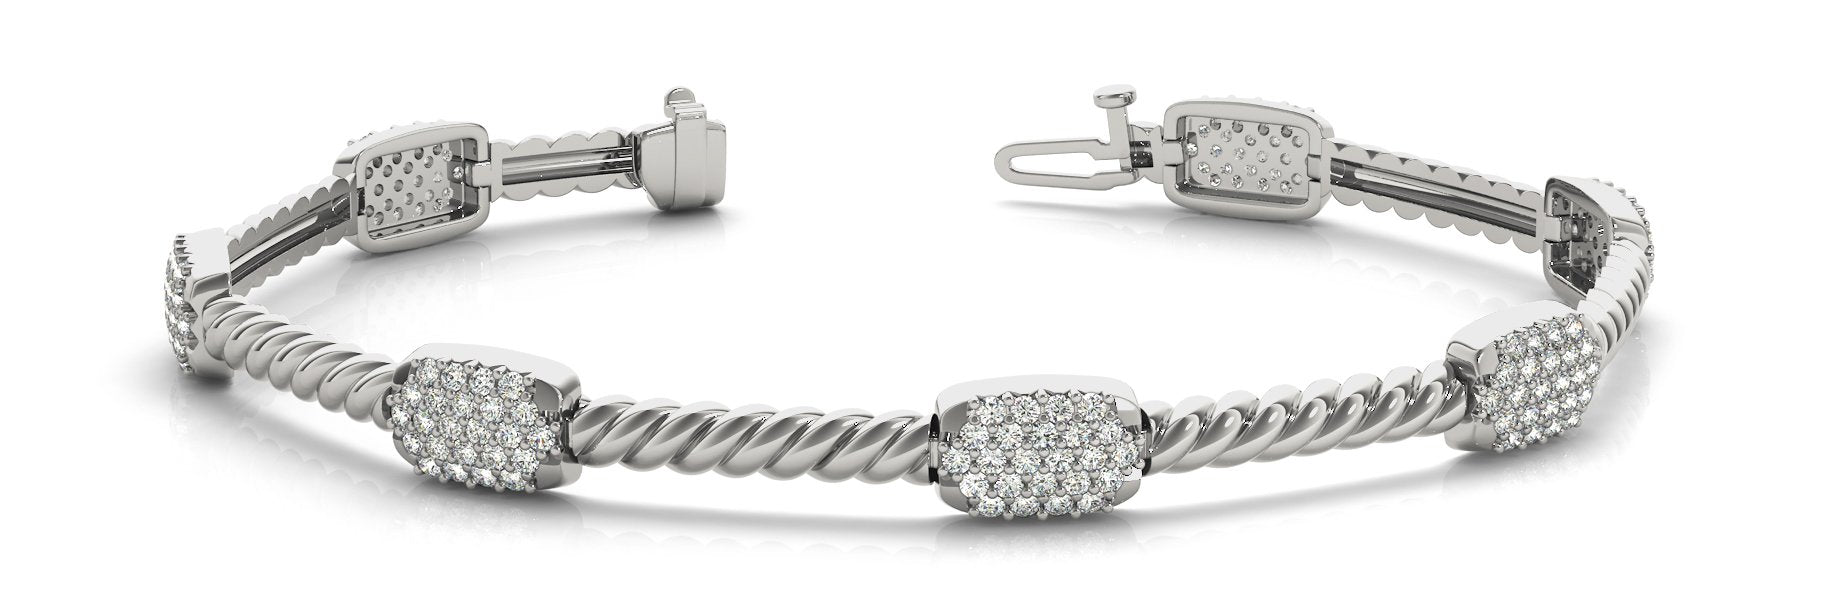 Fancy Diamond Bracelet Ladies 1.98ct tw - 14kt White Gold